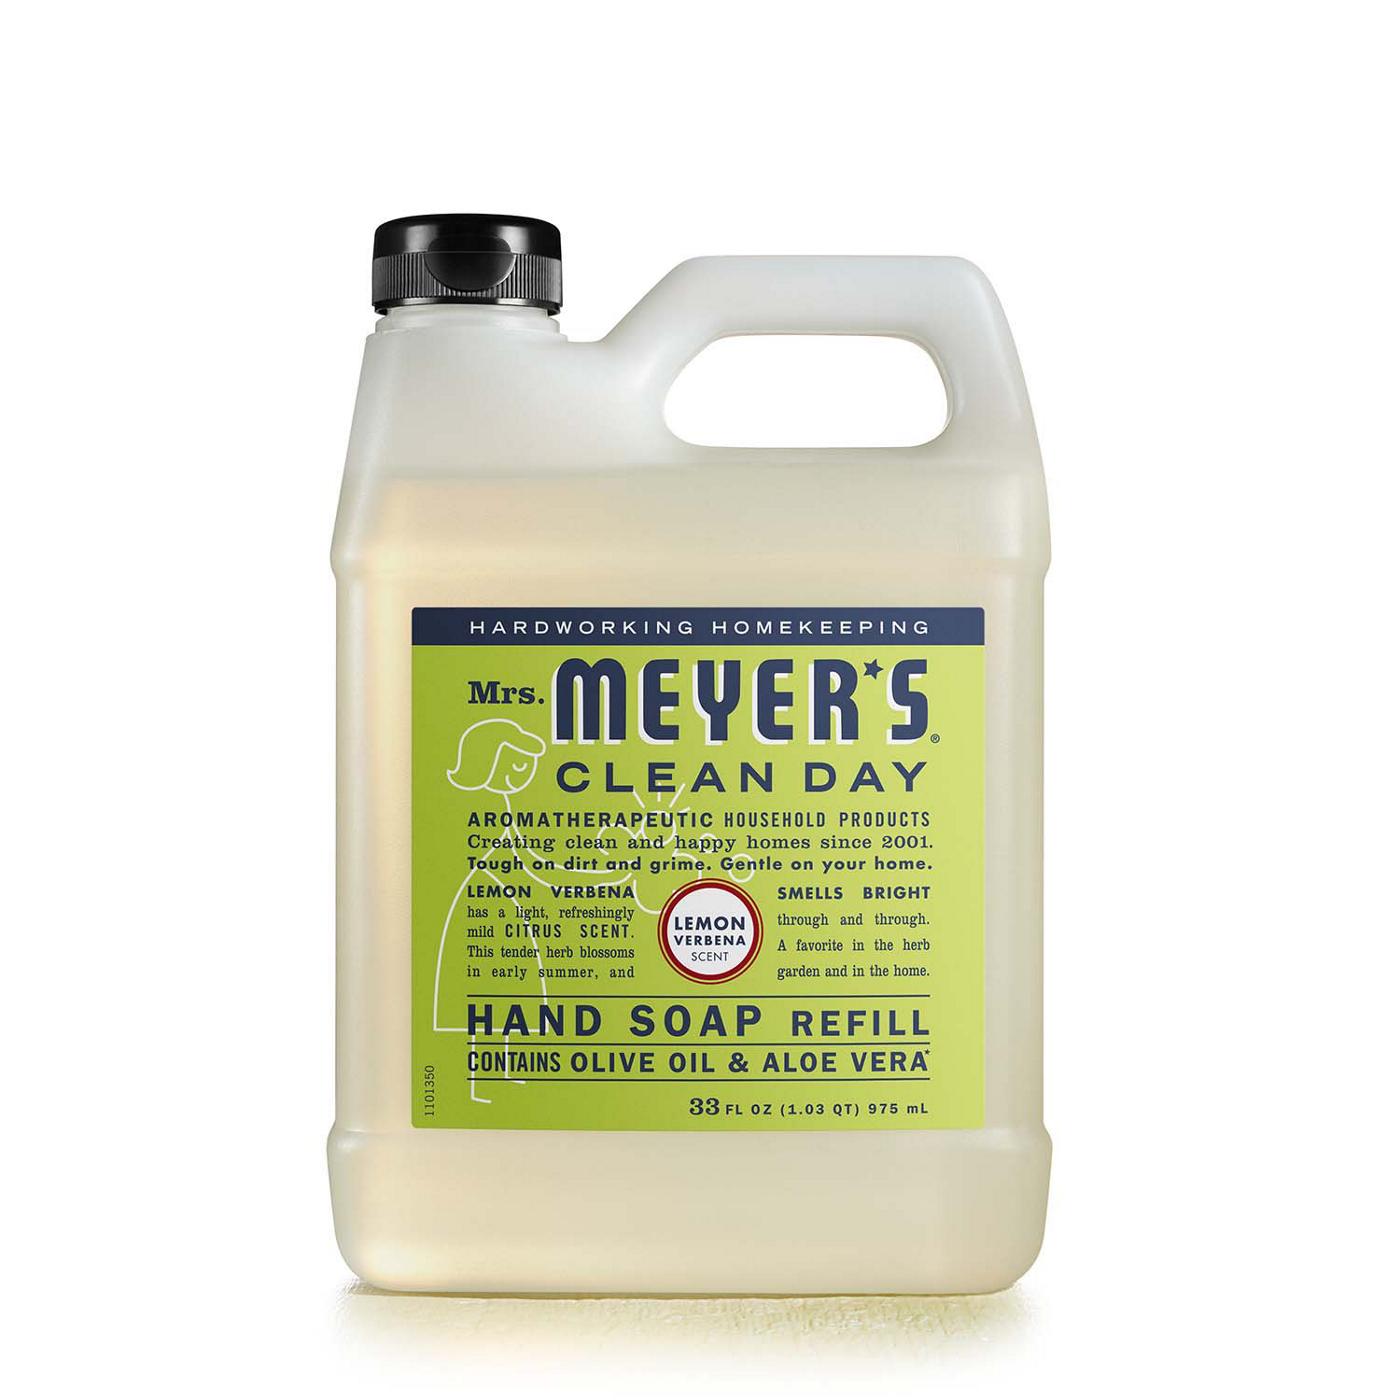 Mrs. Meyer's Clean Day Lemon Verbena Hand Soap Refill; image 1 of 5